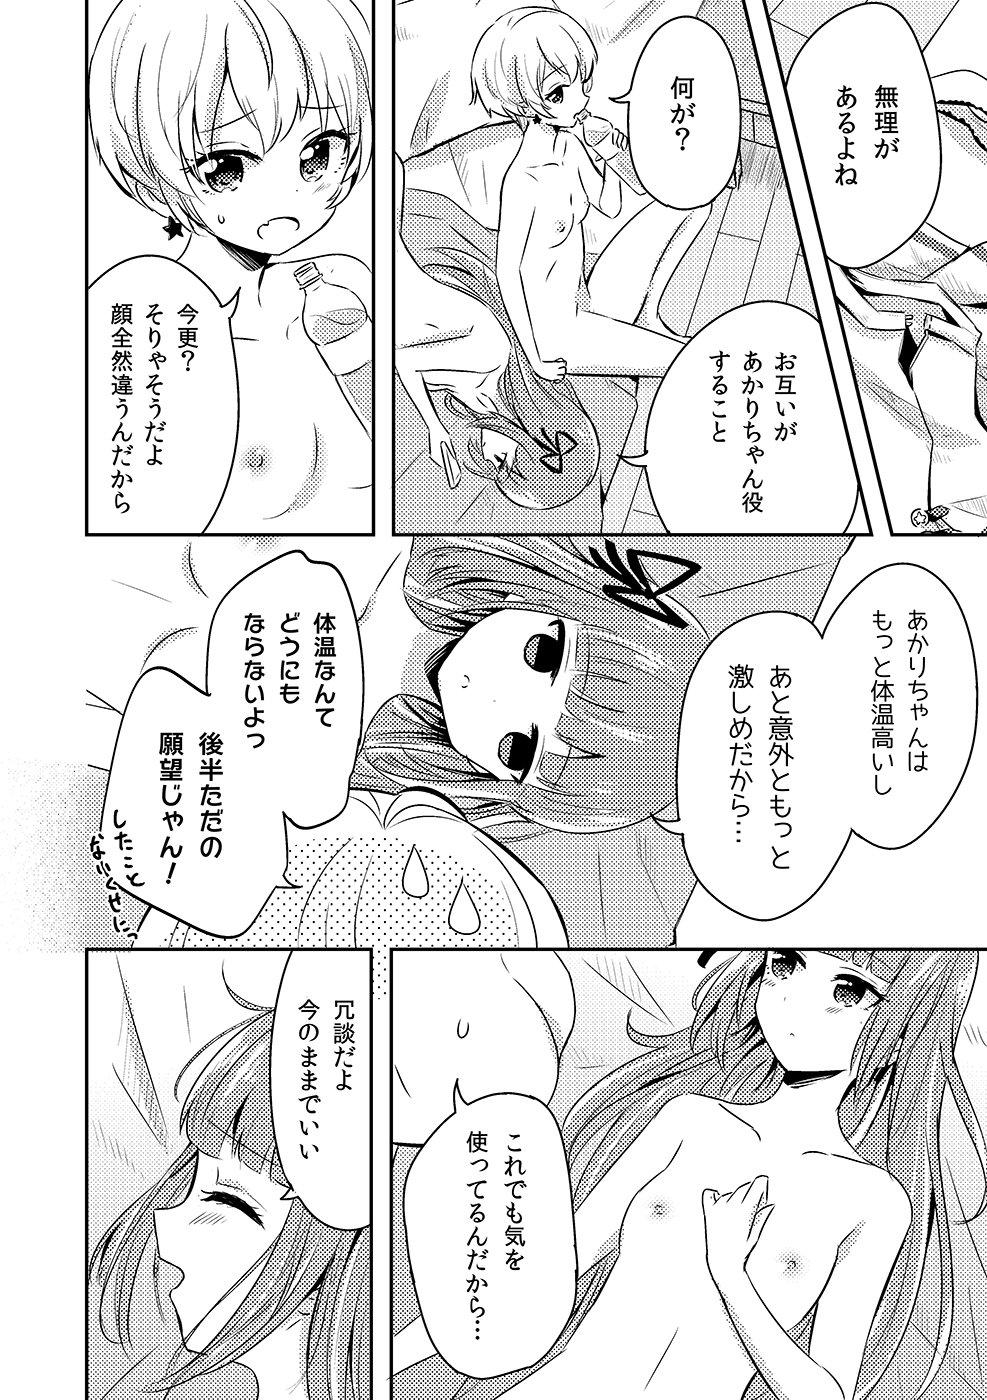 Slim Who contributed to loveless sex joint two years ago! Yuusumi manga. - Aikatsu Titjob - Page 2